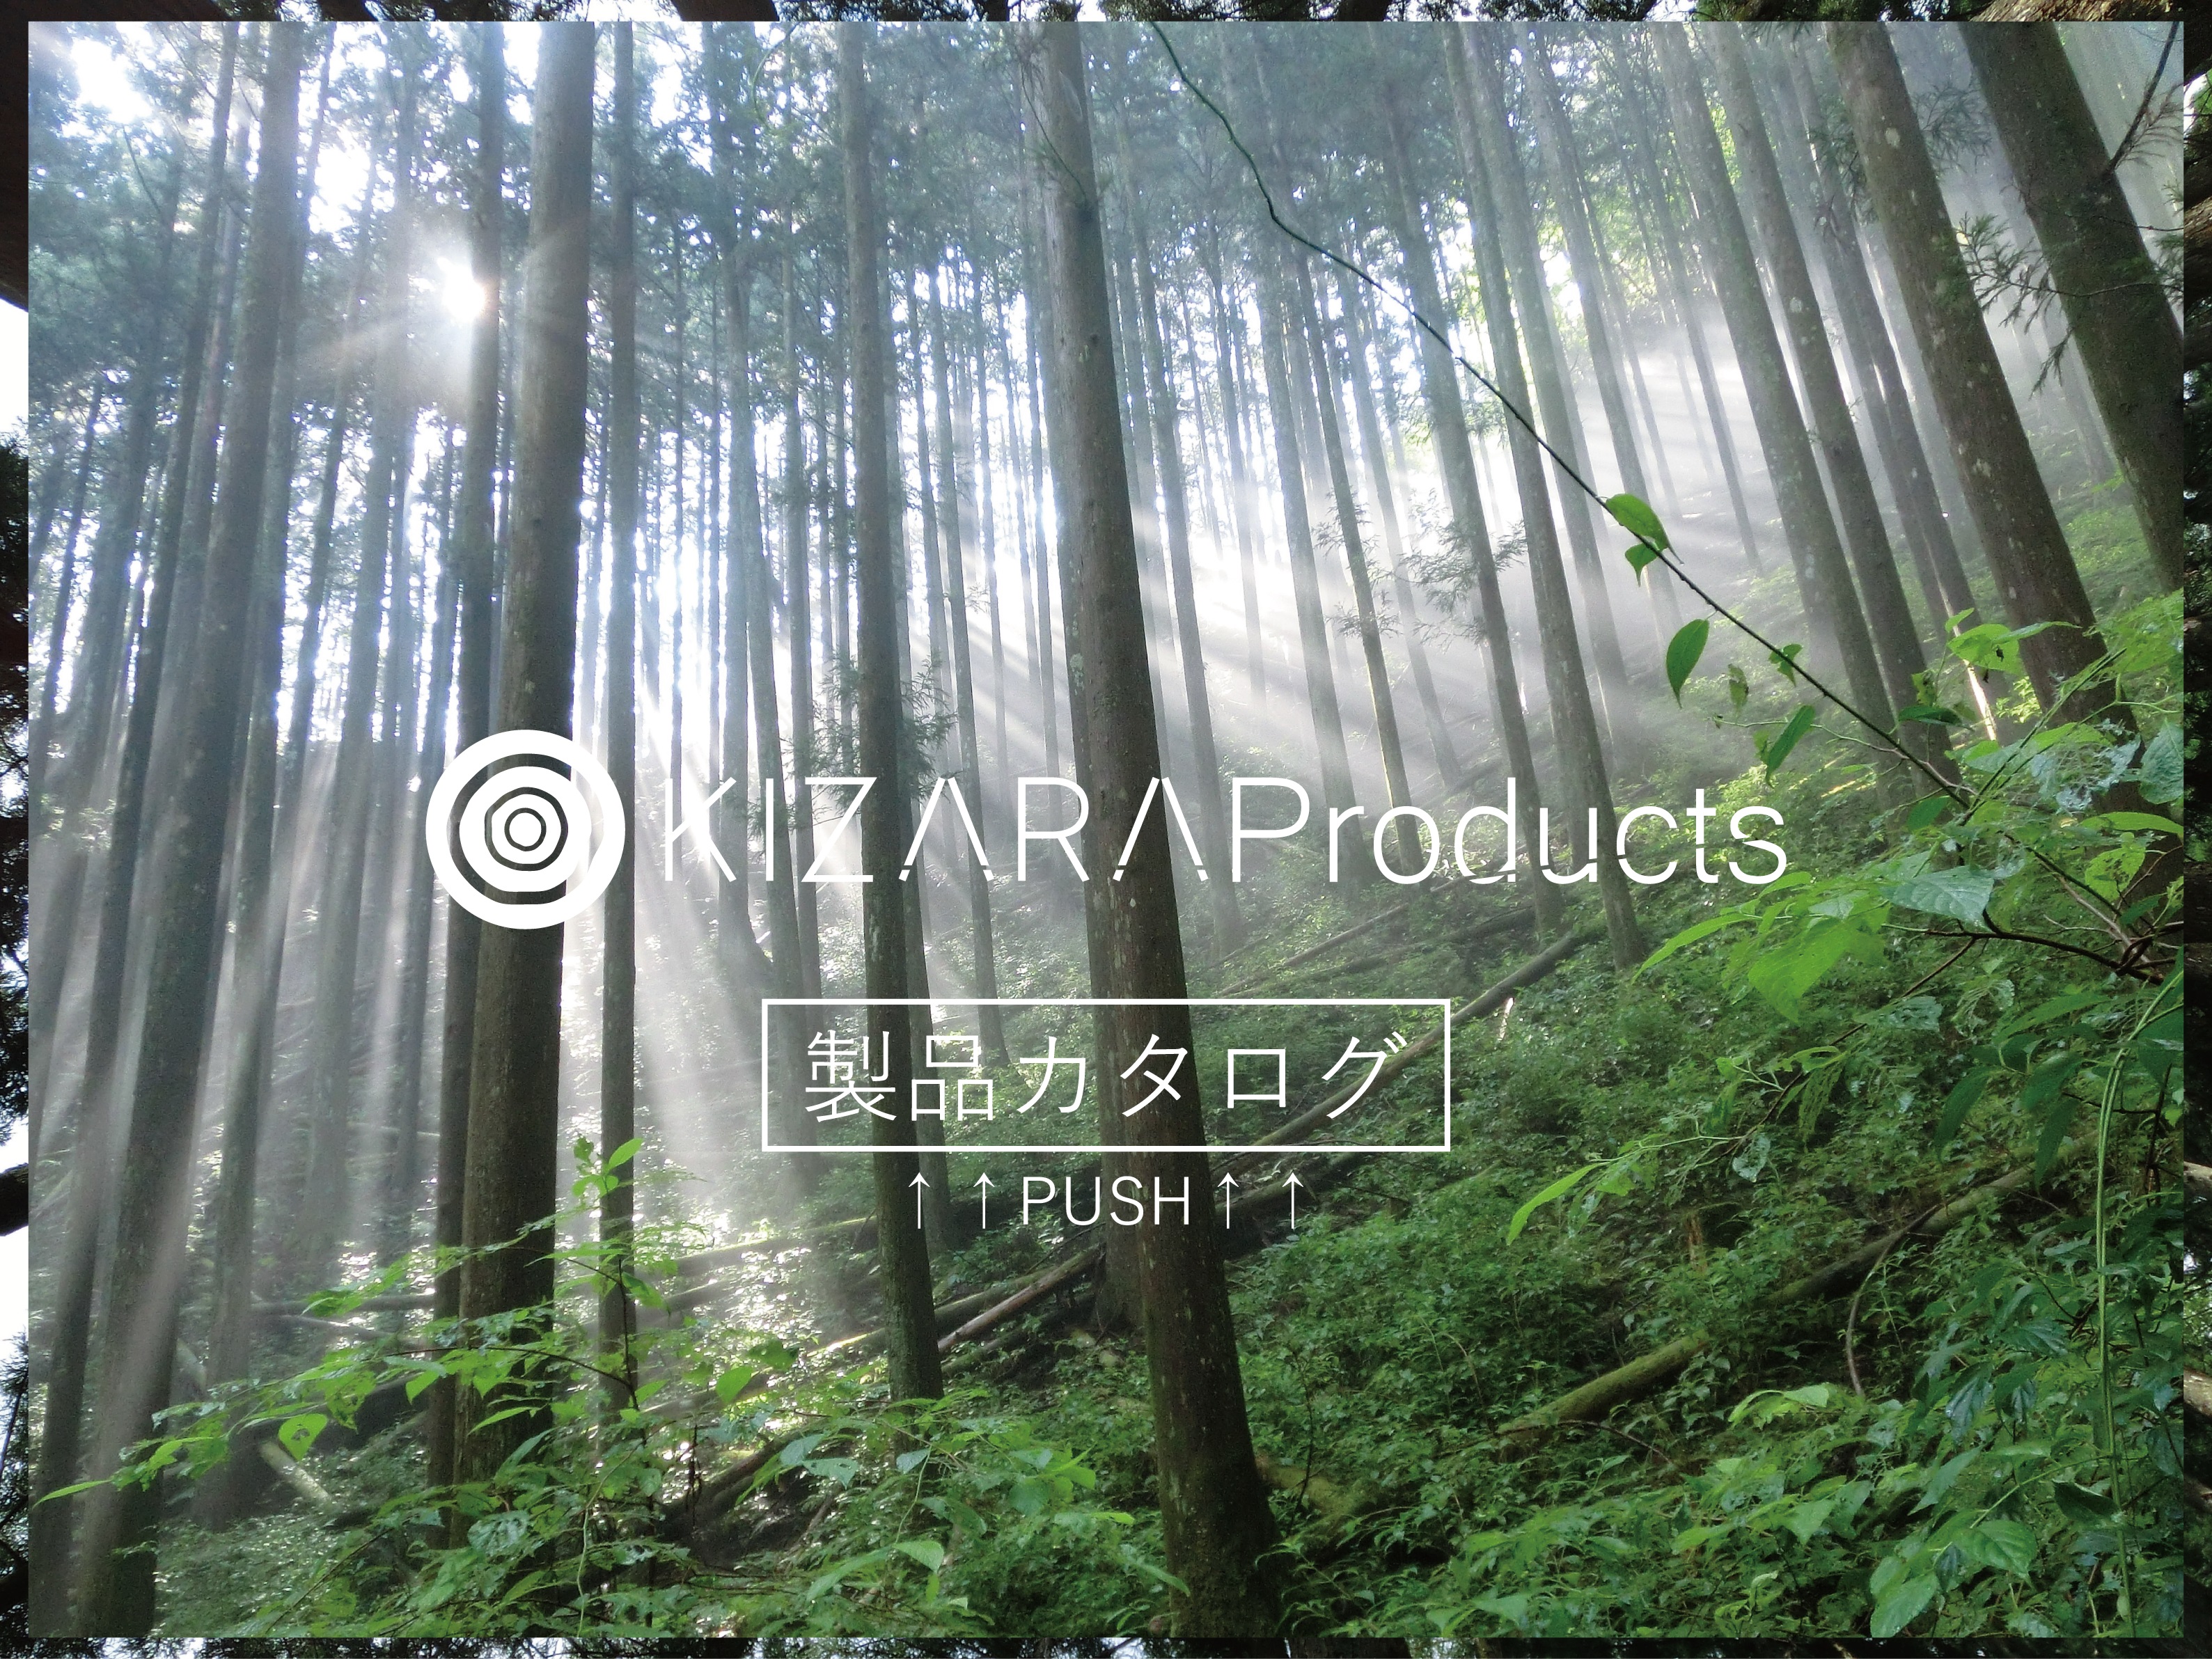 KIZARA Products